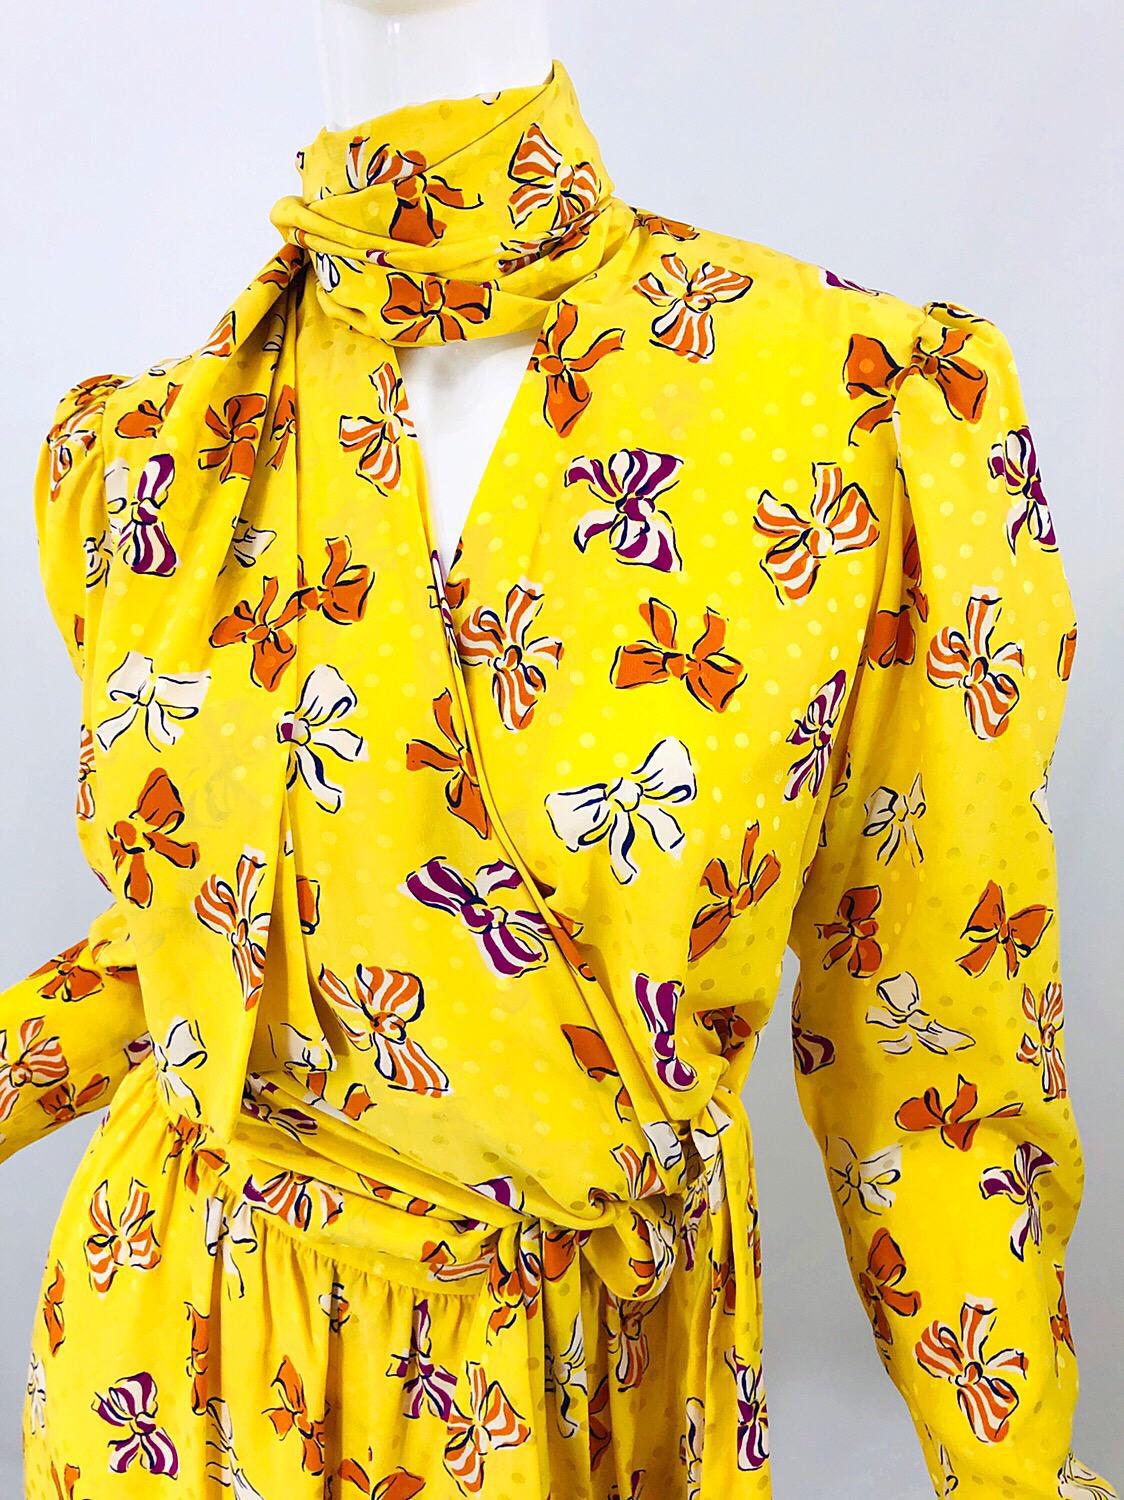 Yves Saint Laurent SS 1987 Runway YSL Yellow Bow Print Silk Blouse + Skirt Dress For Sale 3